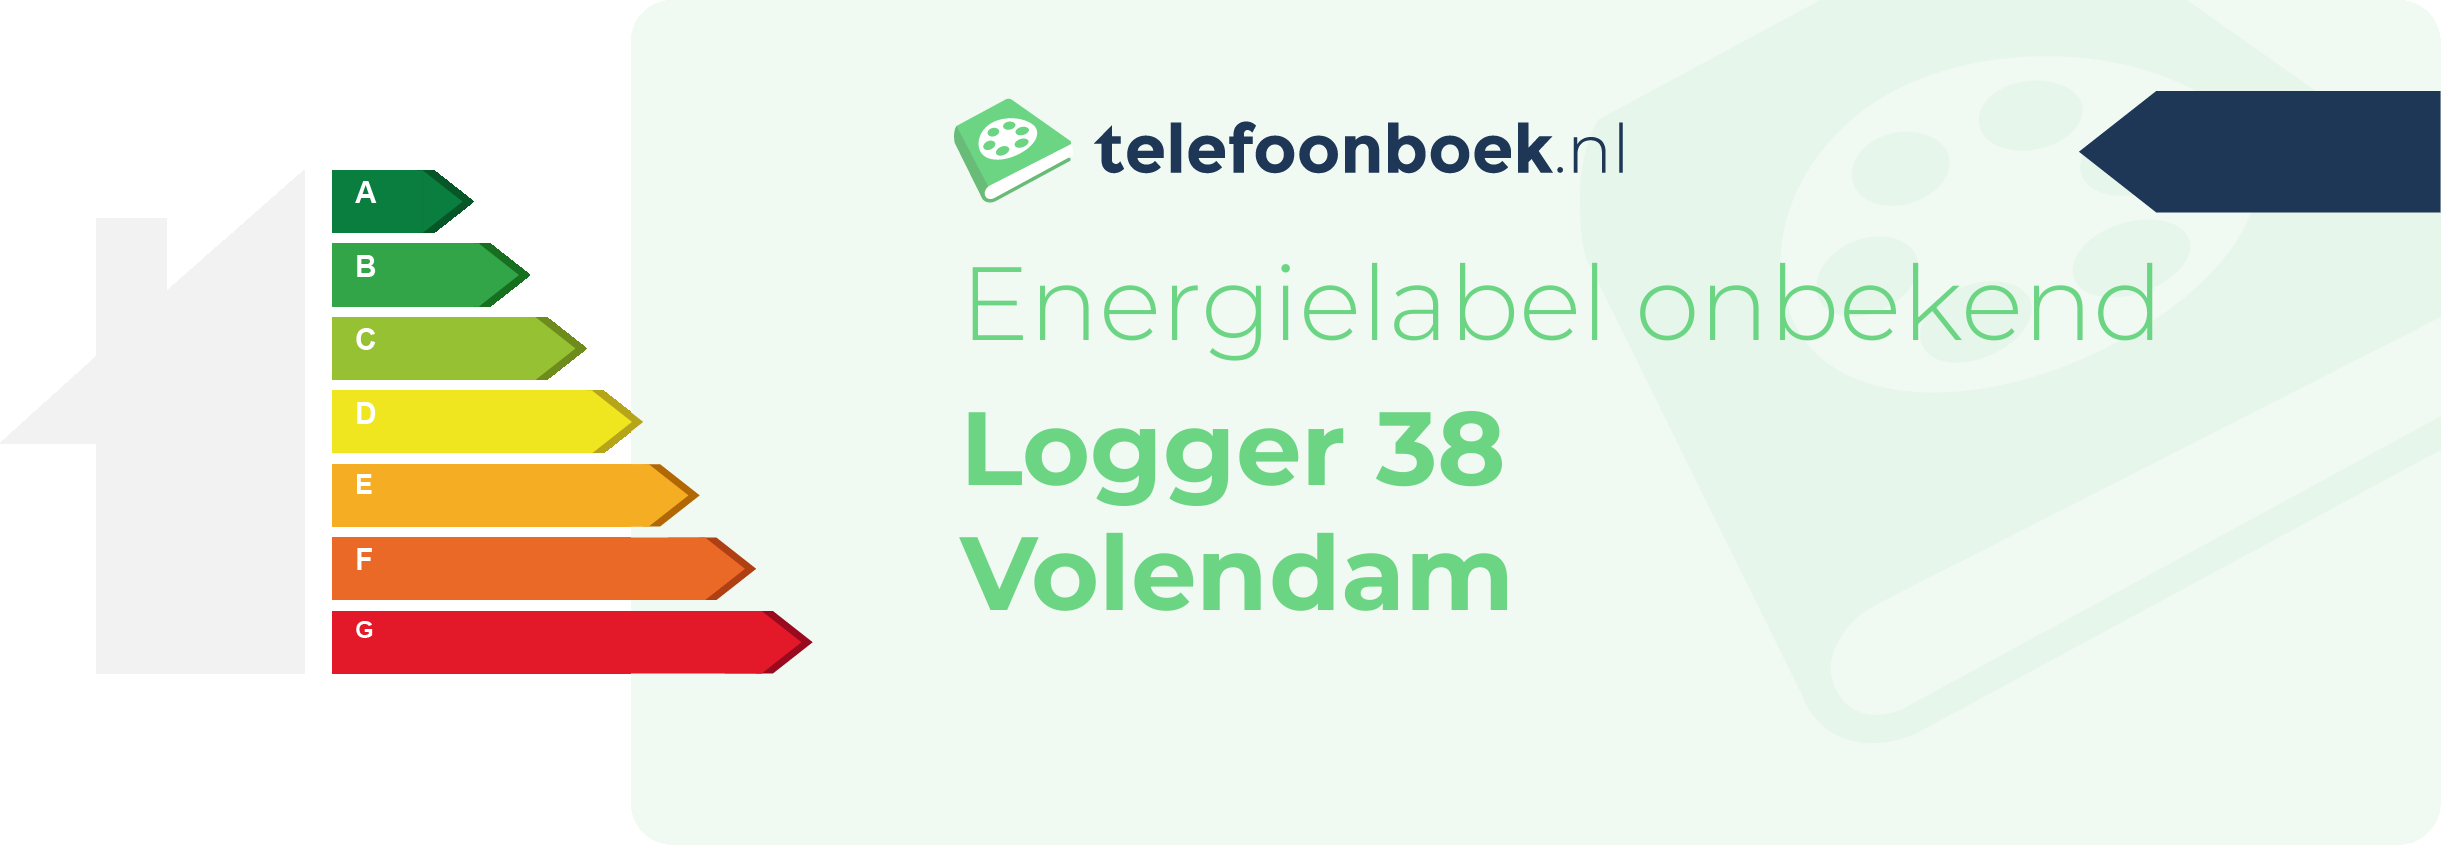 Energielabel Logger 38 Volendam